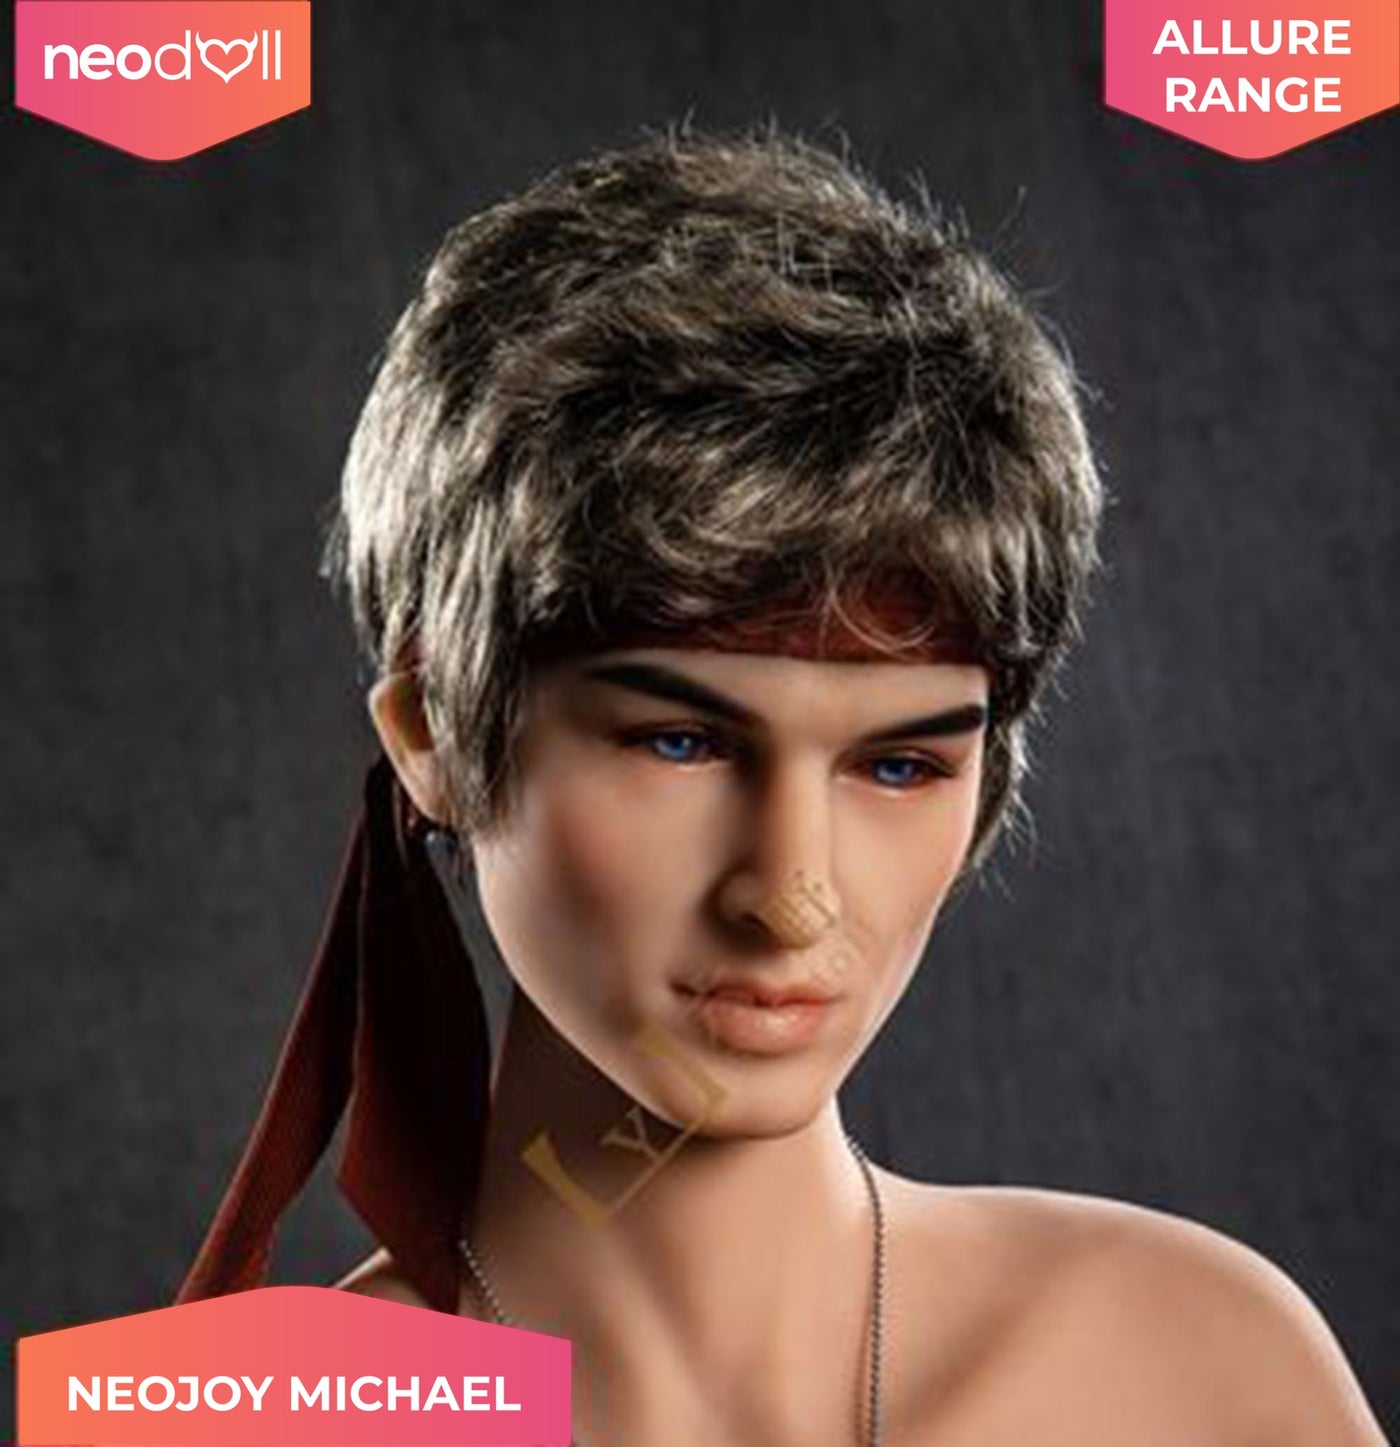 Neodoll Allure Michael - Realistic Male Sex Doll - 173cm - Tan - 23cm Penis